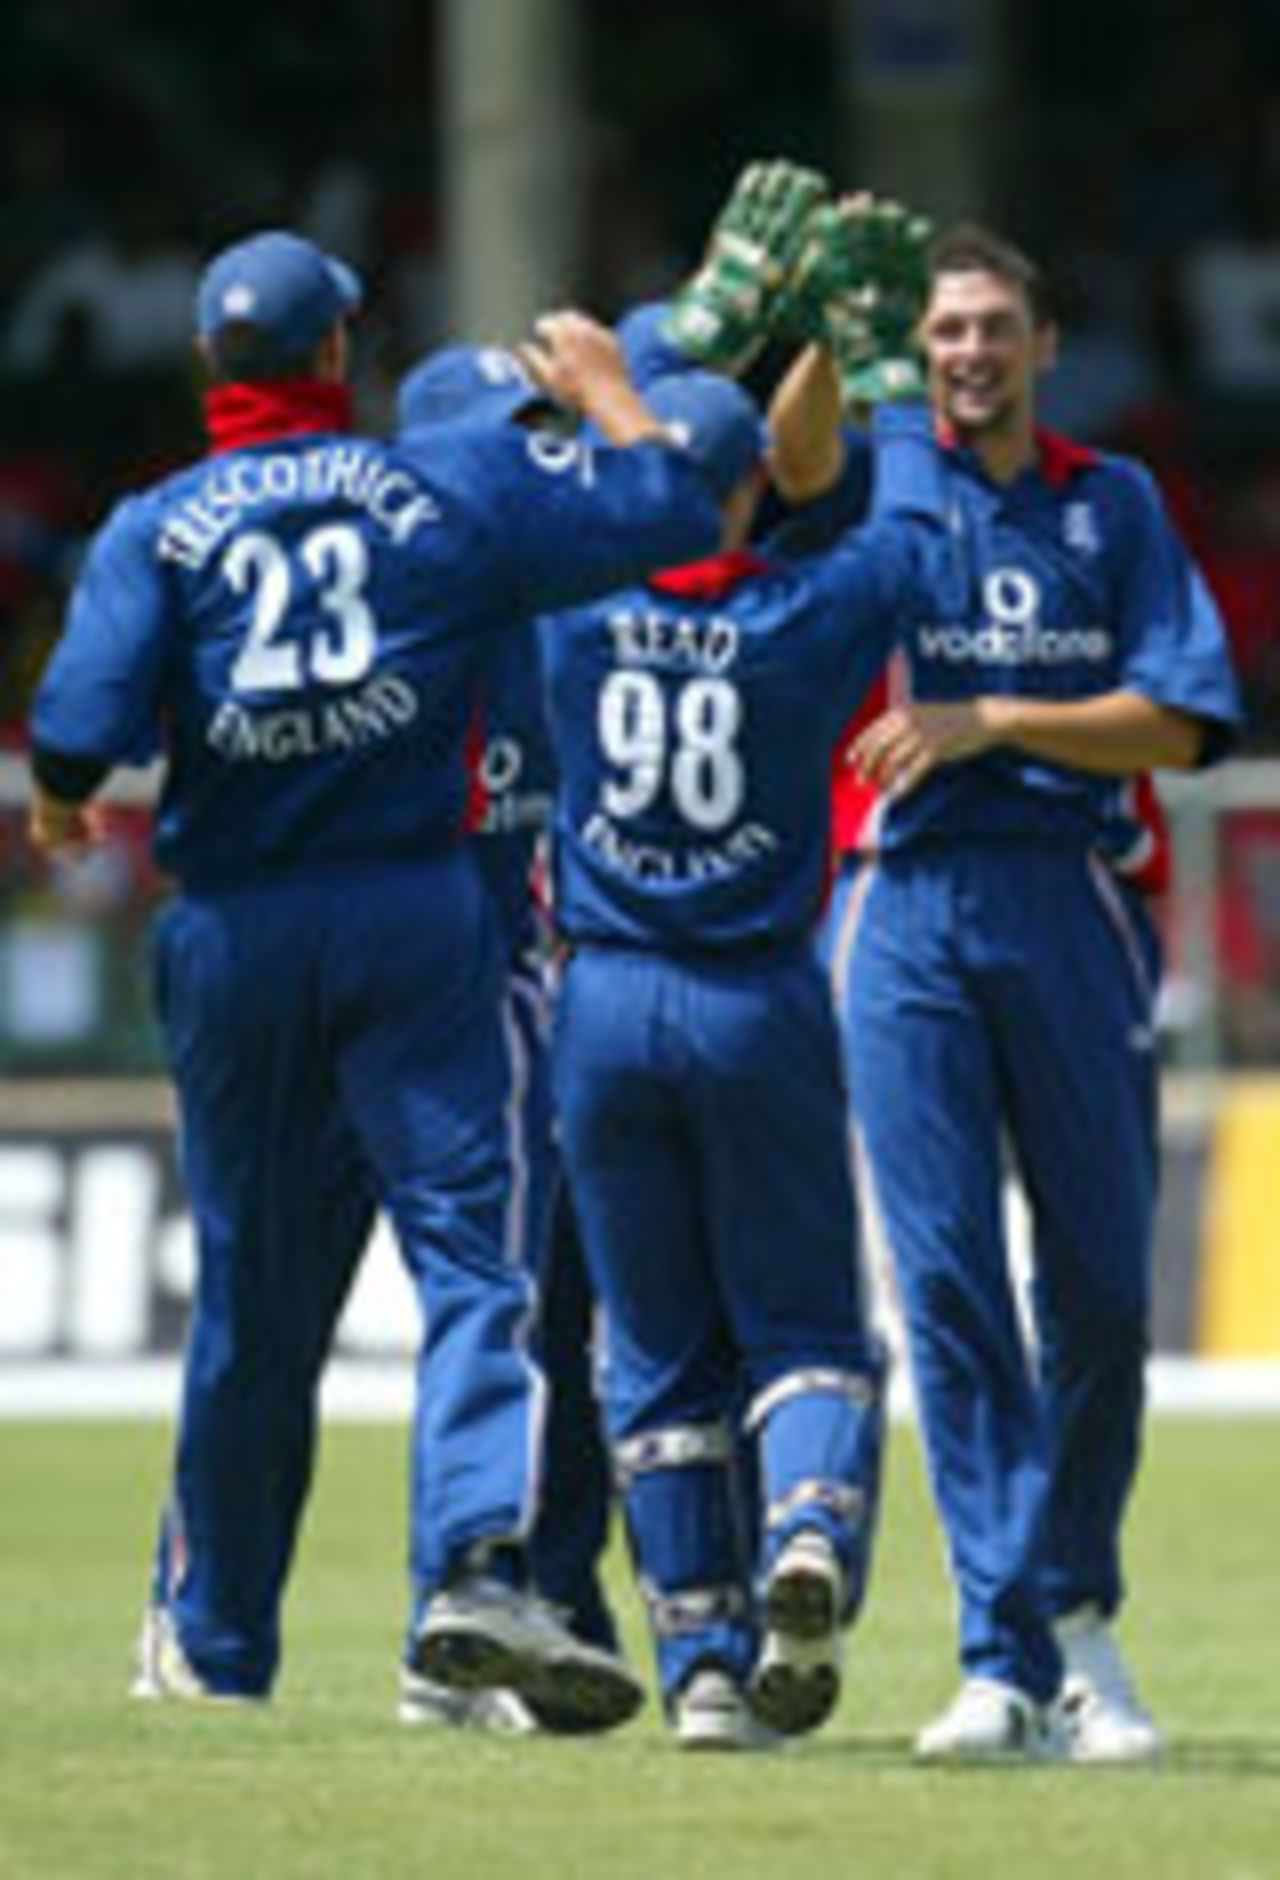 Stephen Harmison celebrating a wicket, West Indies v England, 7th ODI, Barbados, May 5, 2004